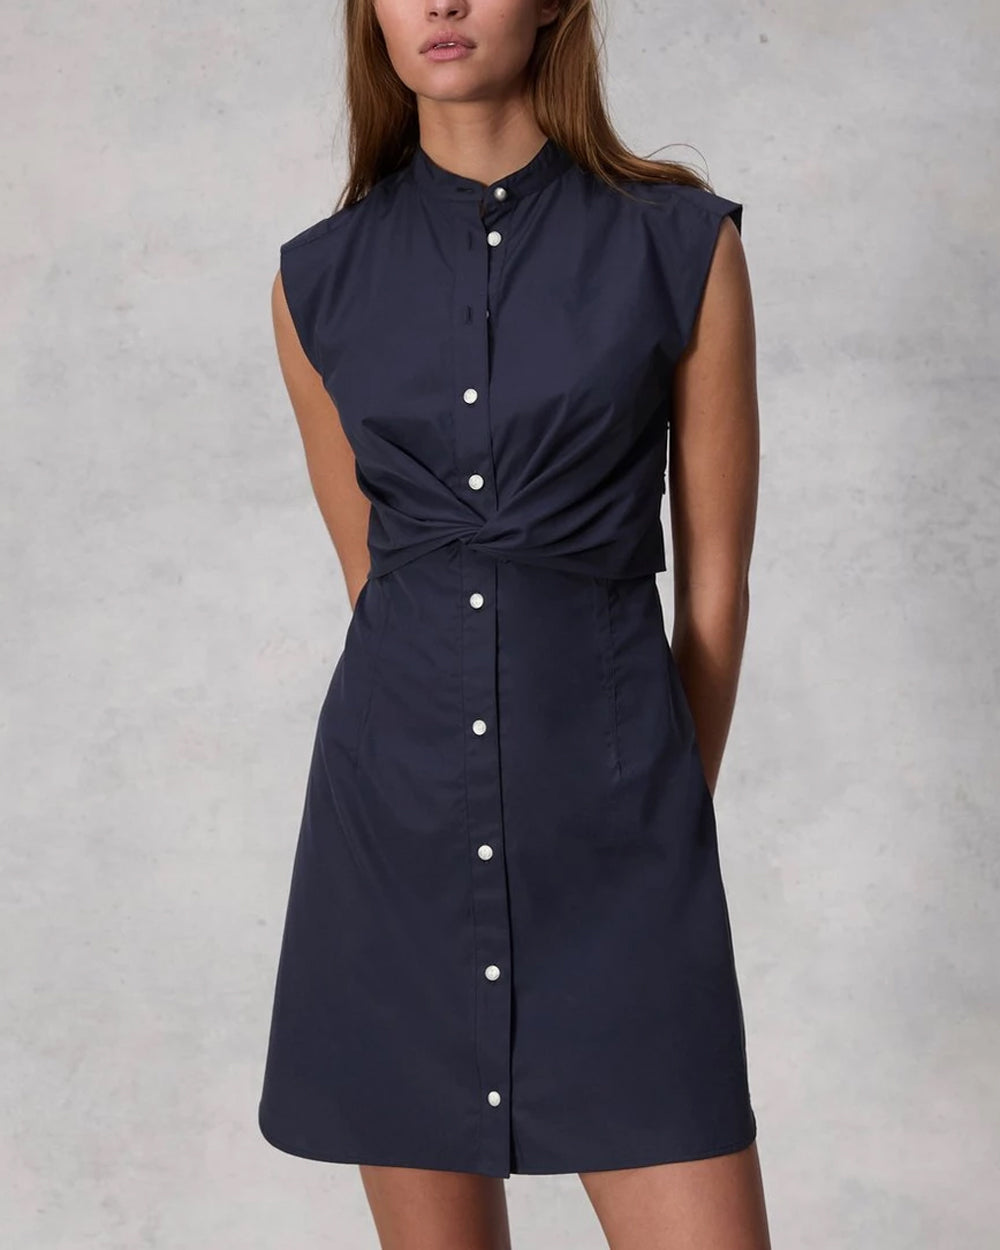 Navy Louisa Sleeveless Dress